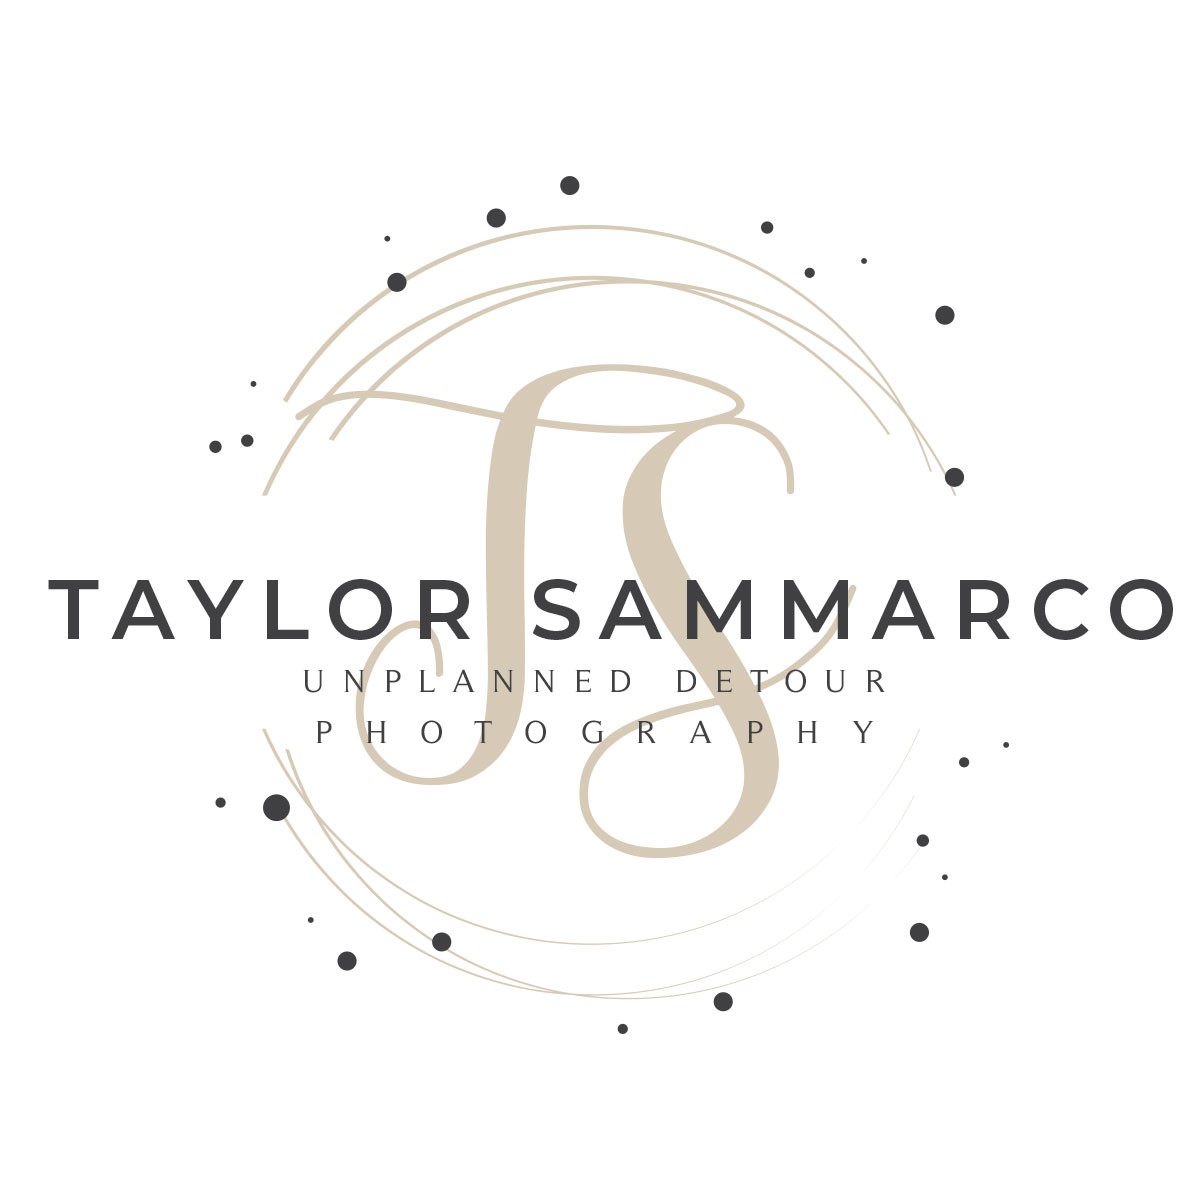 Taylor Sammarco Photography